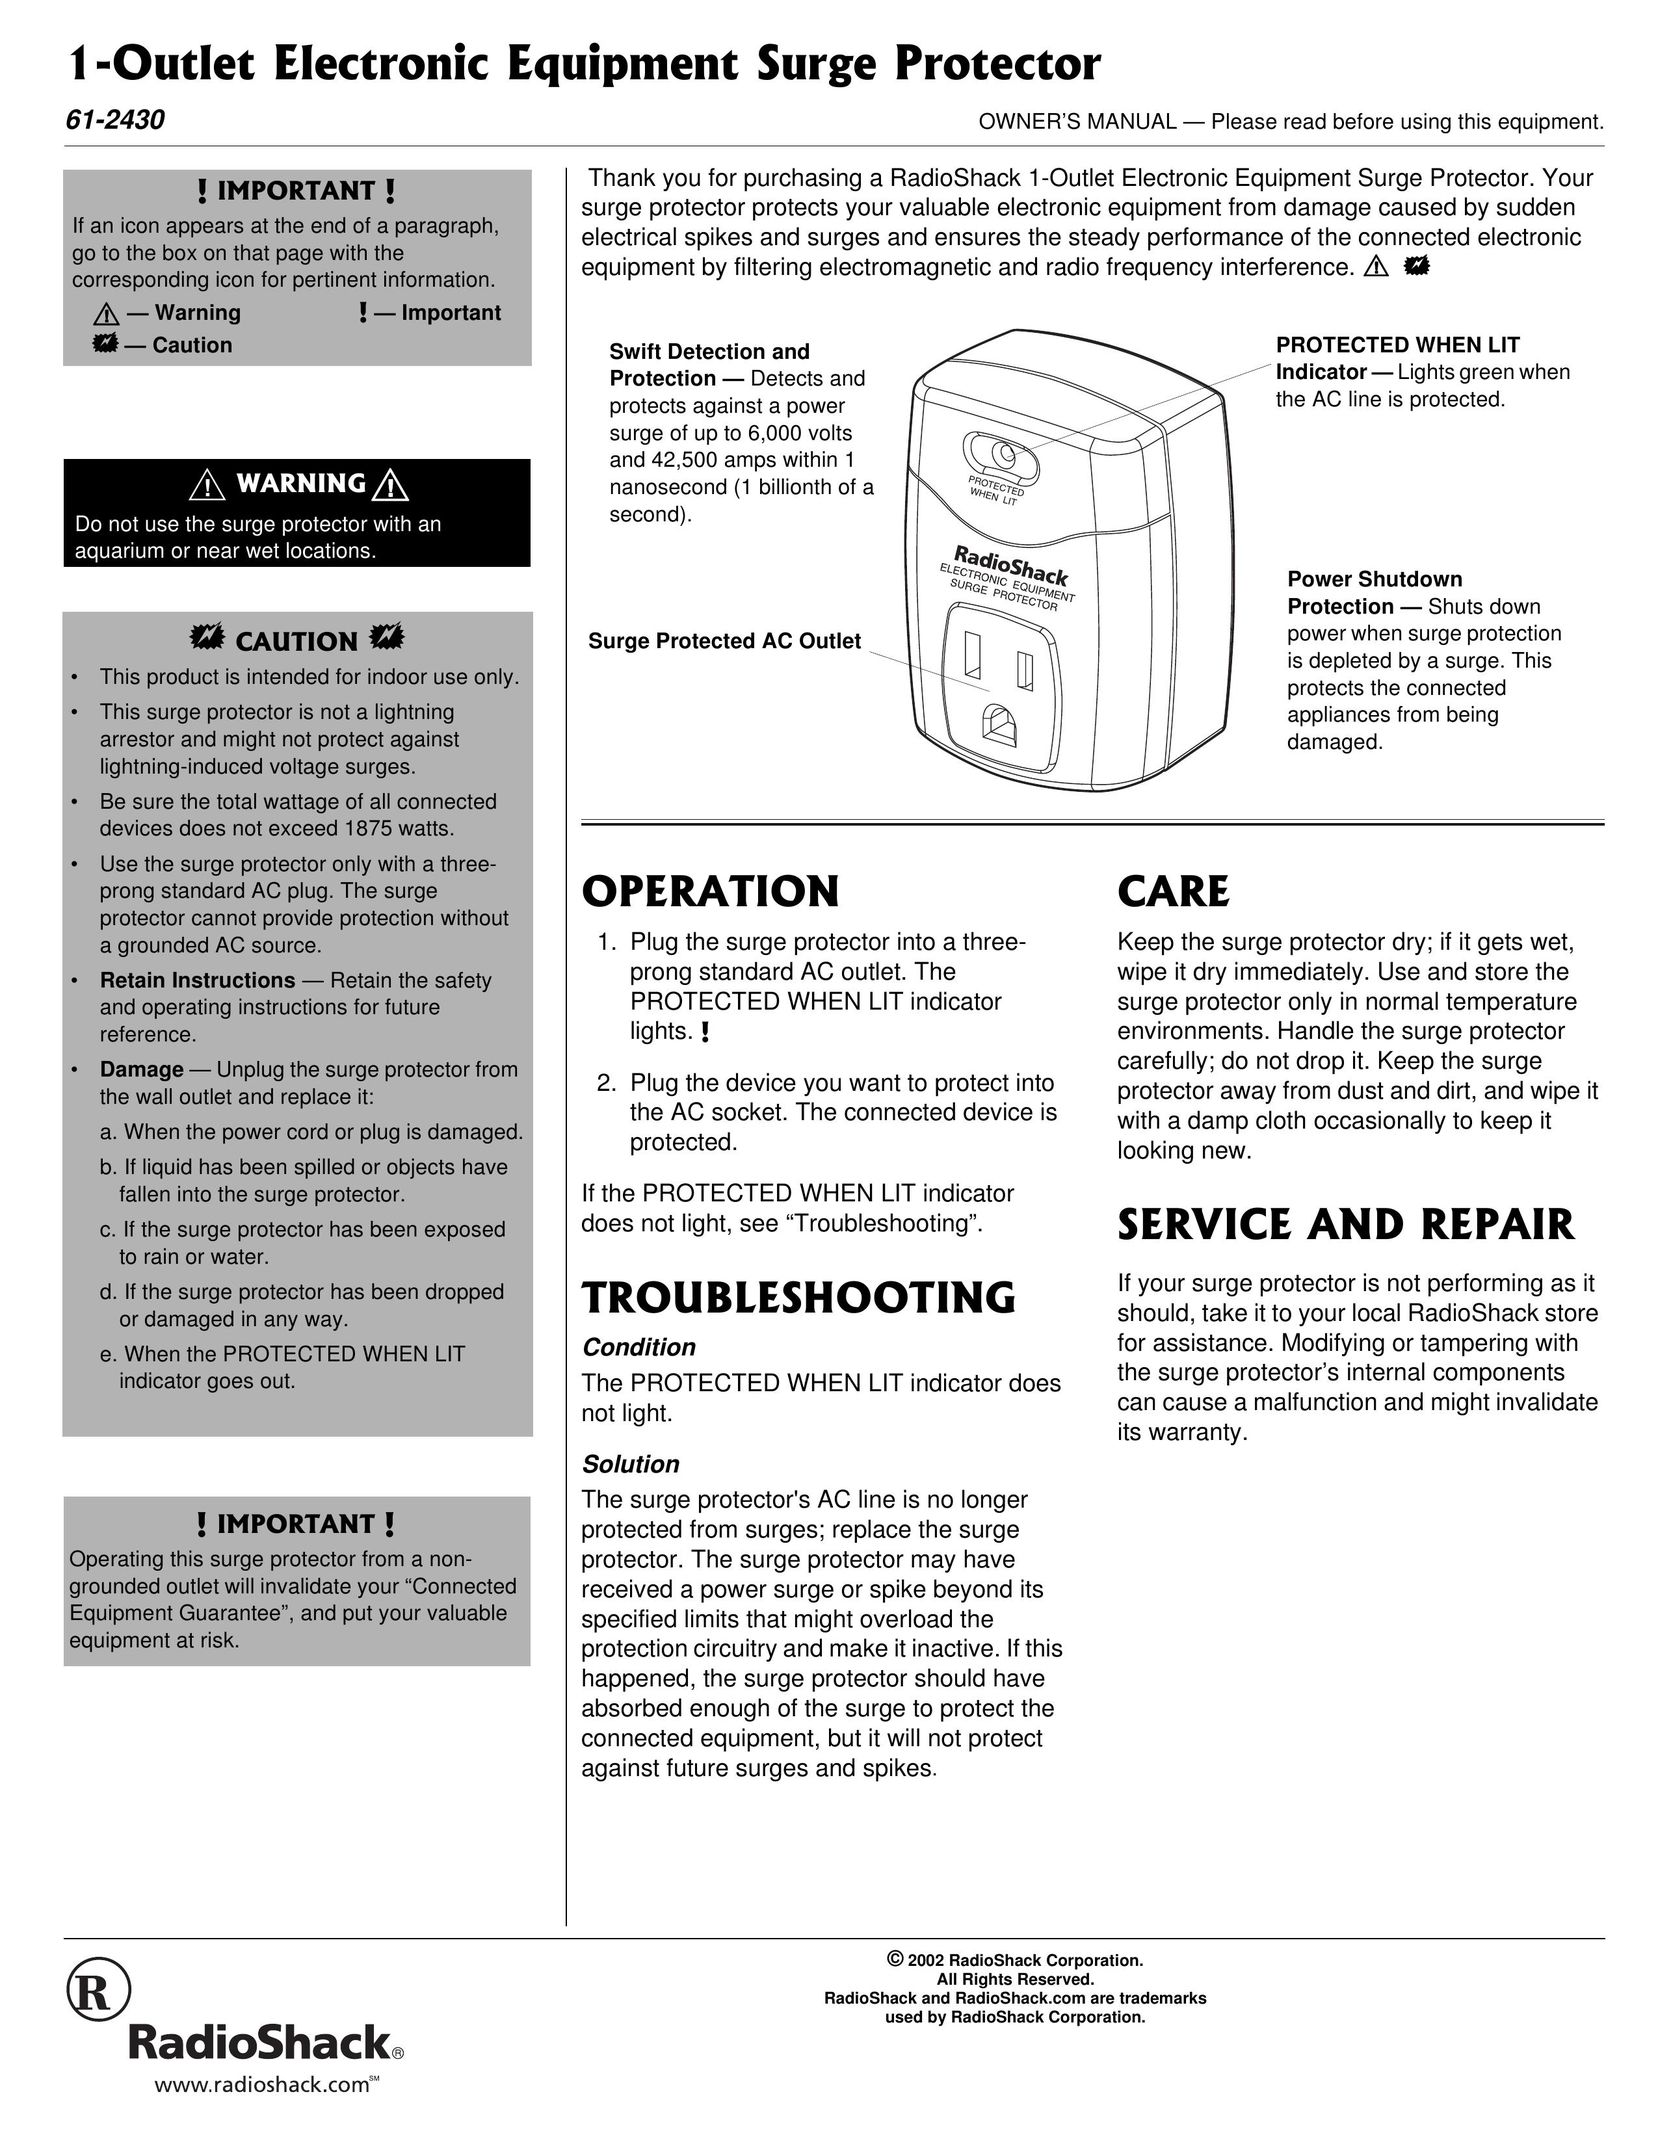 Radio Shack 61-2430 Surge Protector User Manual